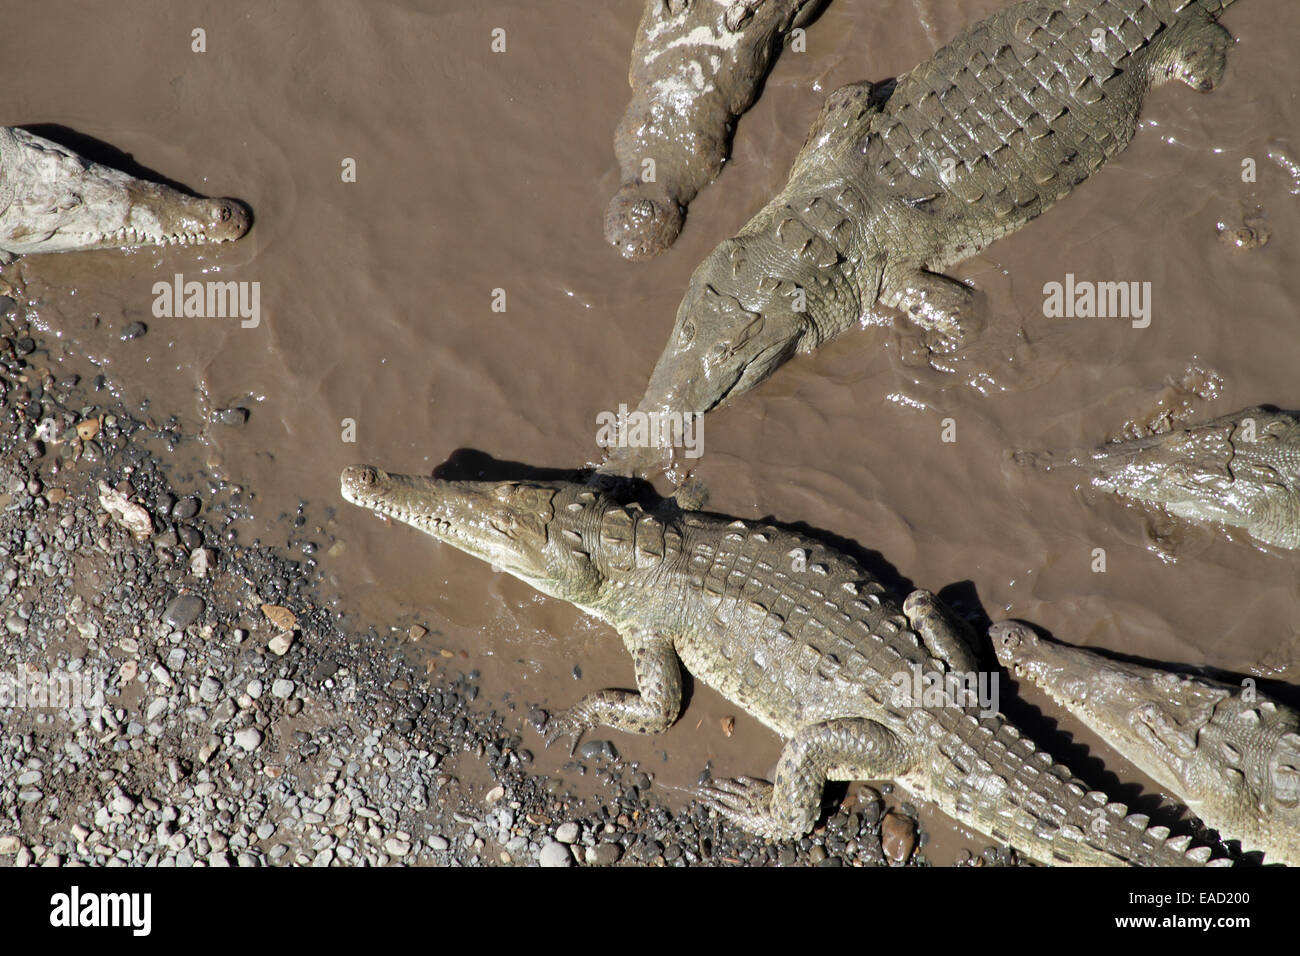 Amerikanische Krokodile Crocodylus Acutus, sonnen sich am Tempisque Fluss Rand Stockfoto